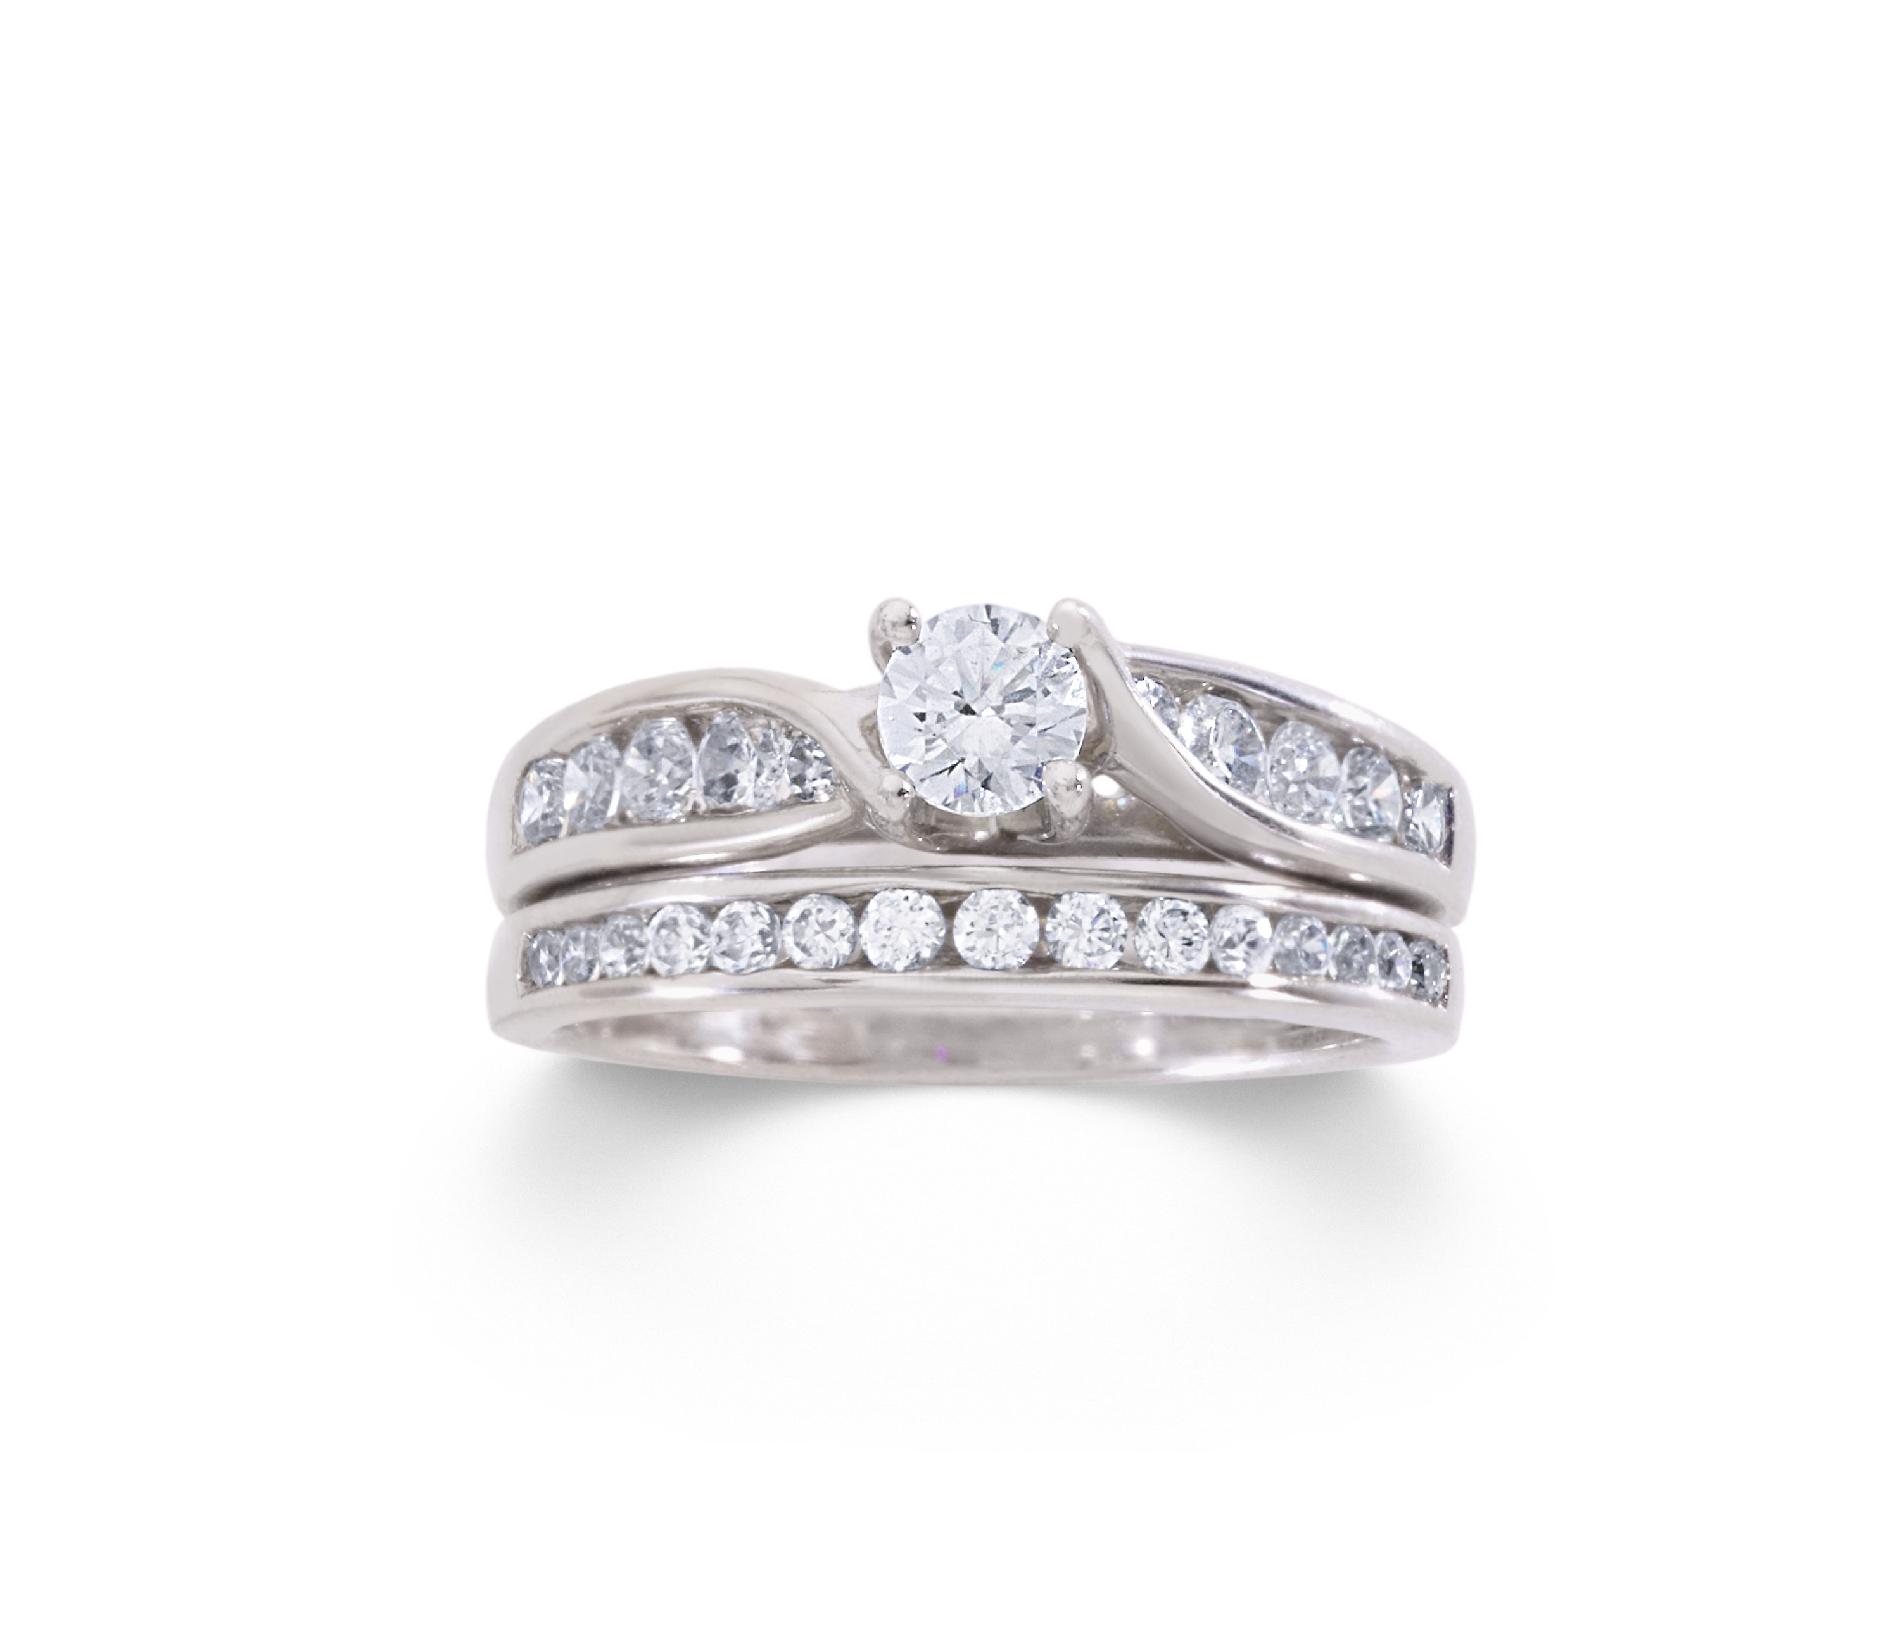 1 Cttw. Diamond & 10k White Gold Engagement Ring